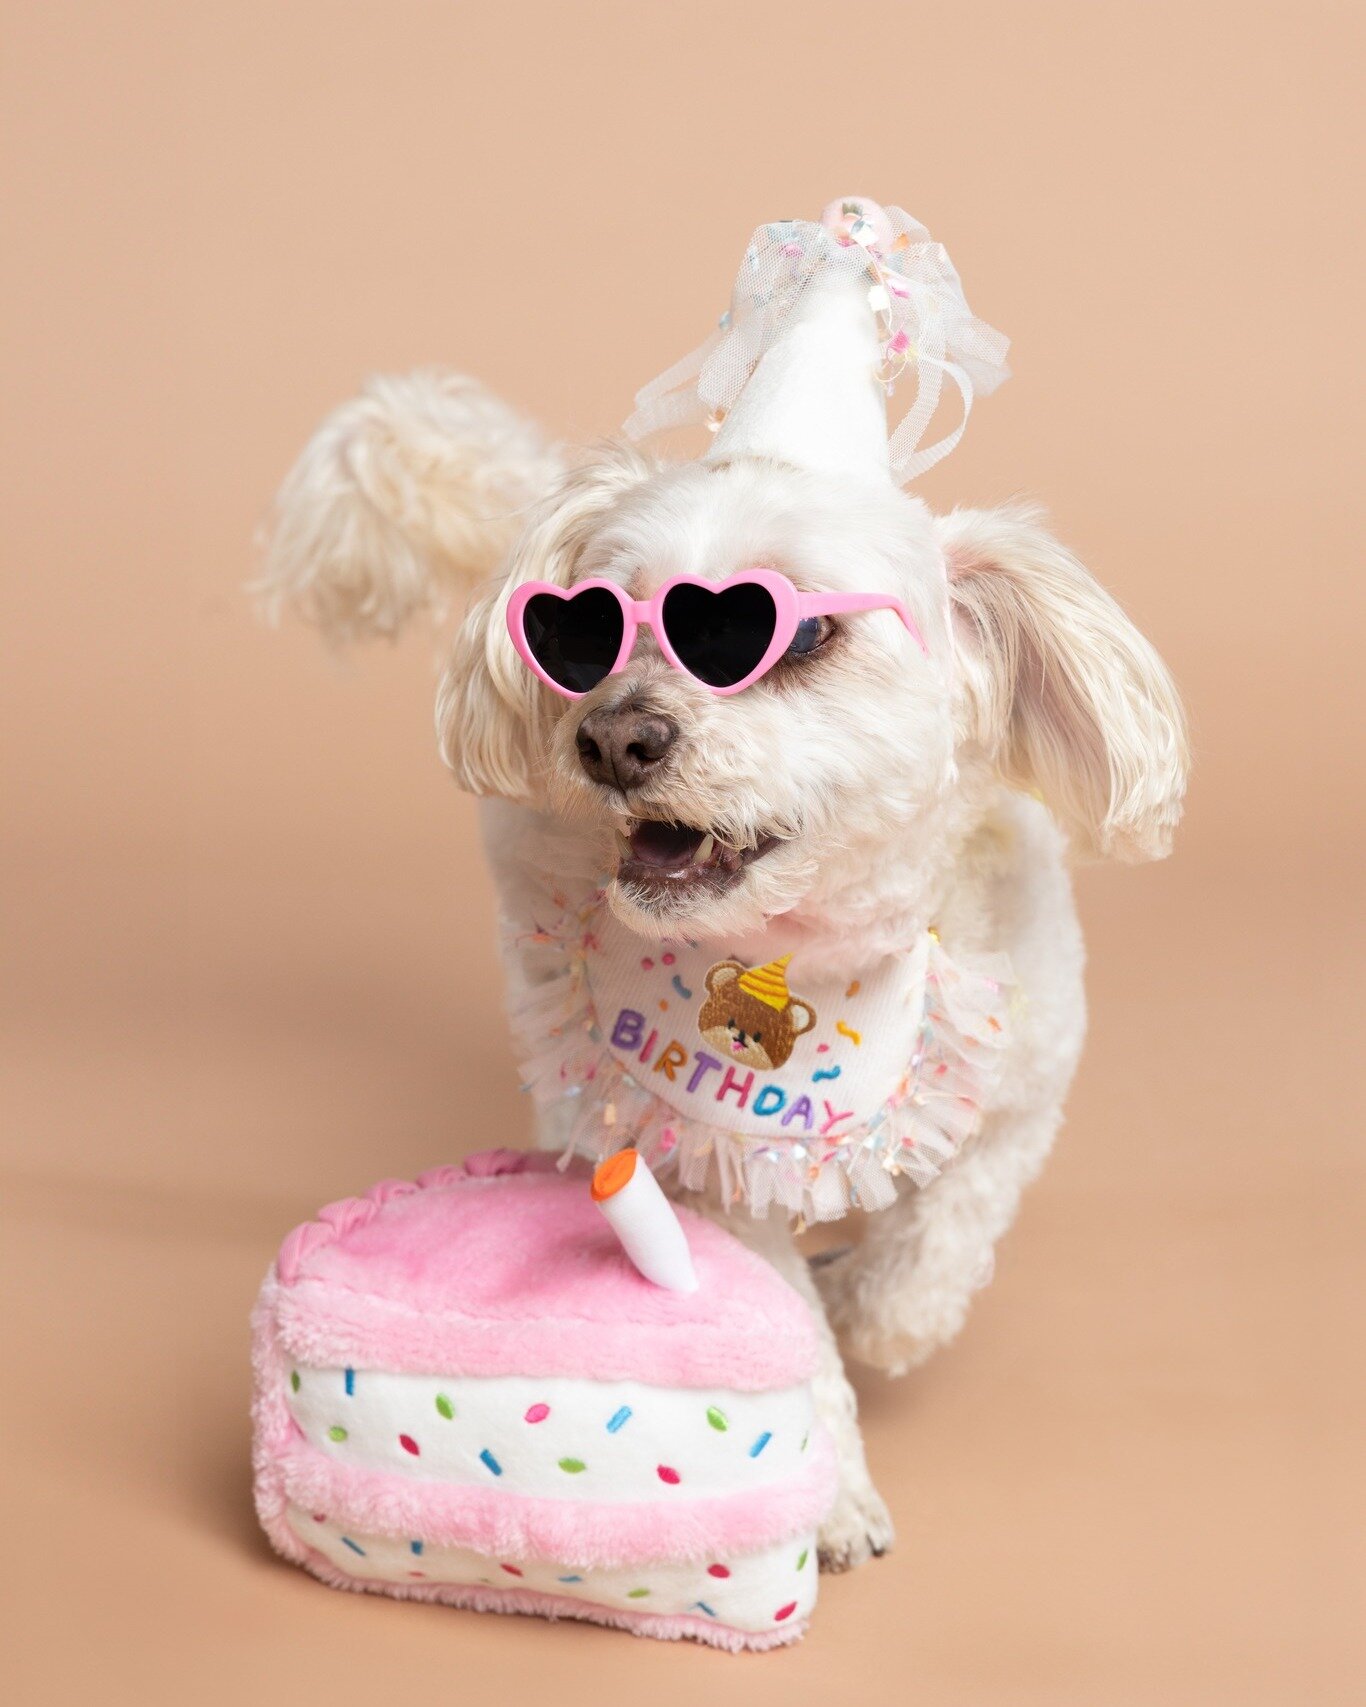 Lola's birthday photo shoot! 😍
.
 #torontodogs #torontodogsofinstagram #torontodoglovers #cutepetclub #dogphotographer #torontodogphotographer #torontopetphotographer #dogfashion #dogslife